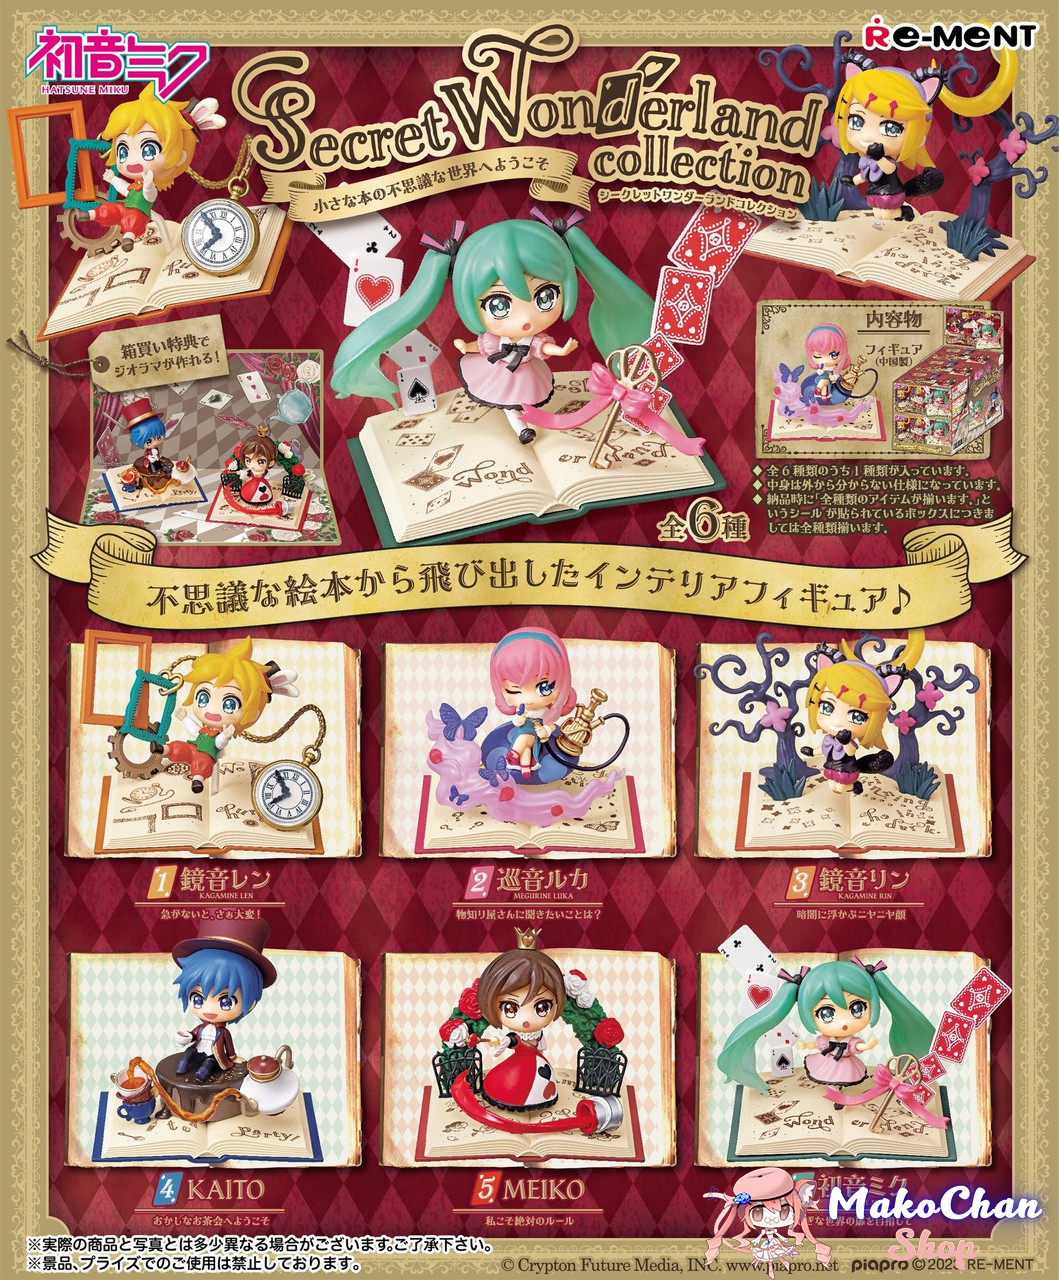 Re-ment Hatsune Miku Secret Wonderland Collection  (pre-order)